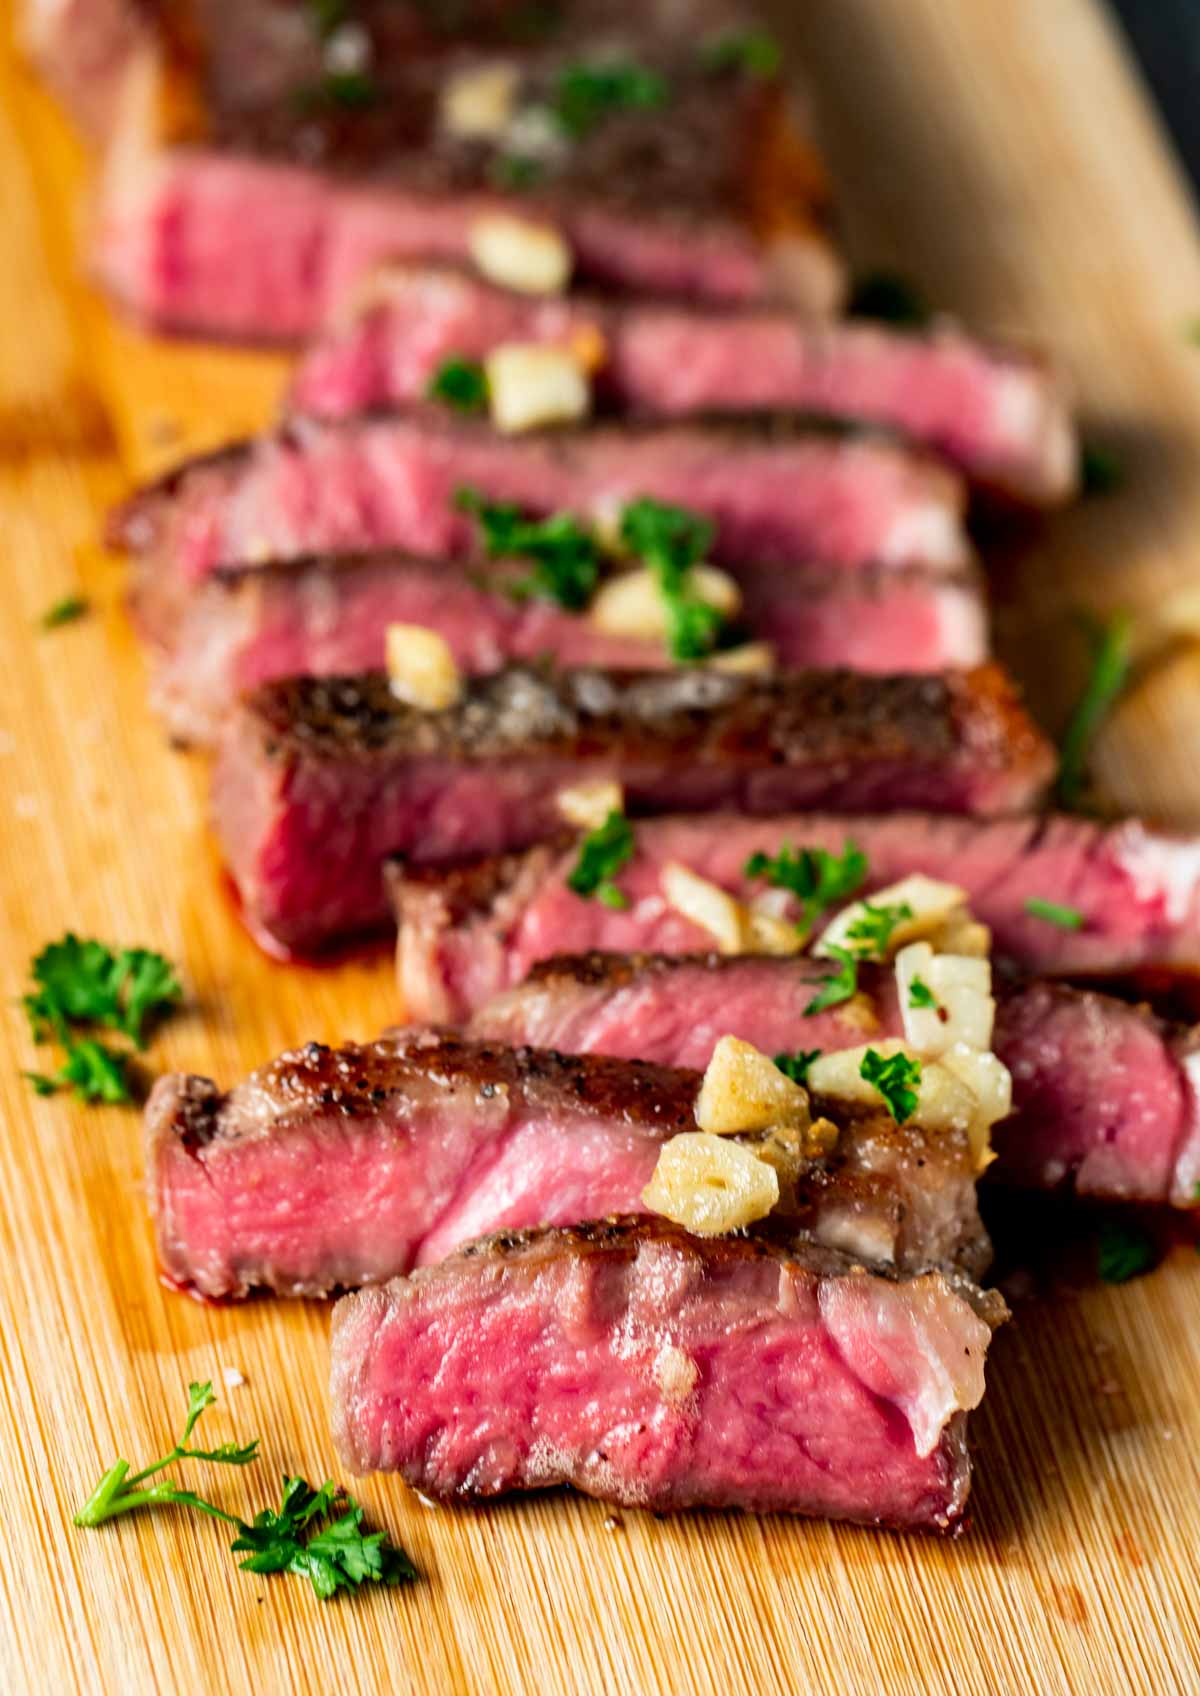 Sliced sous vide steak on a wooden cutting board.